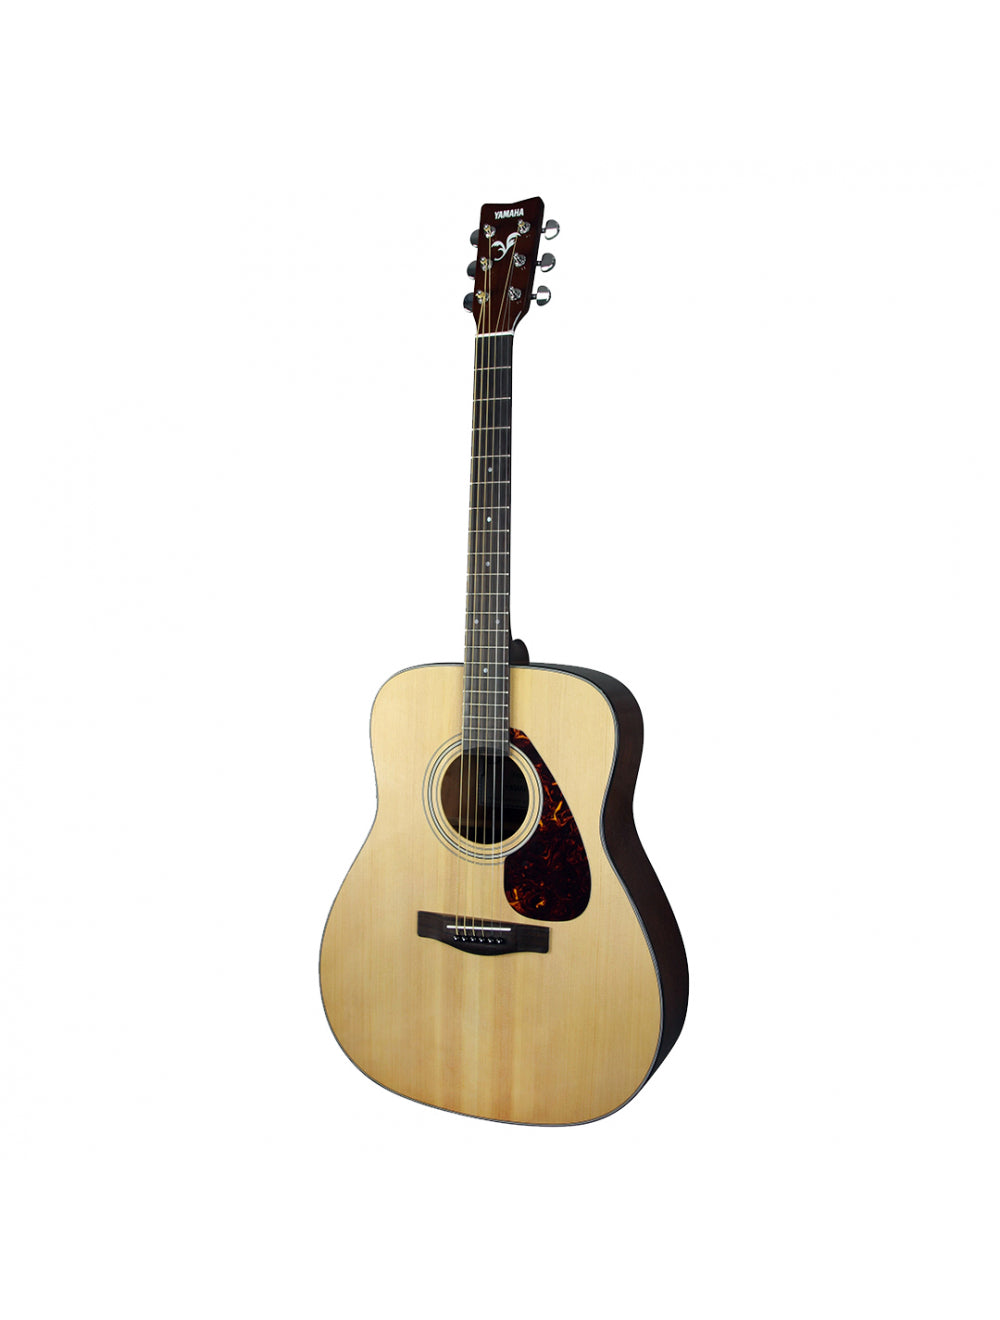 Yamaha F600 Acoustic Guitar